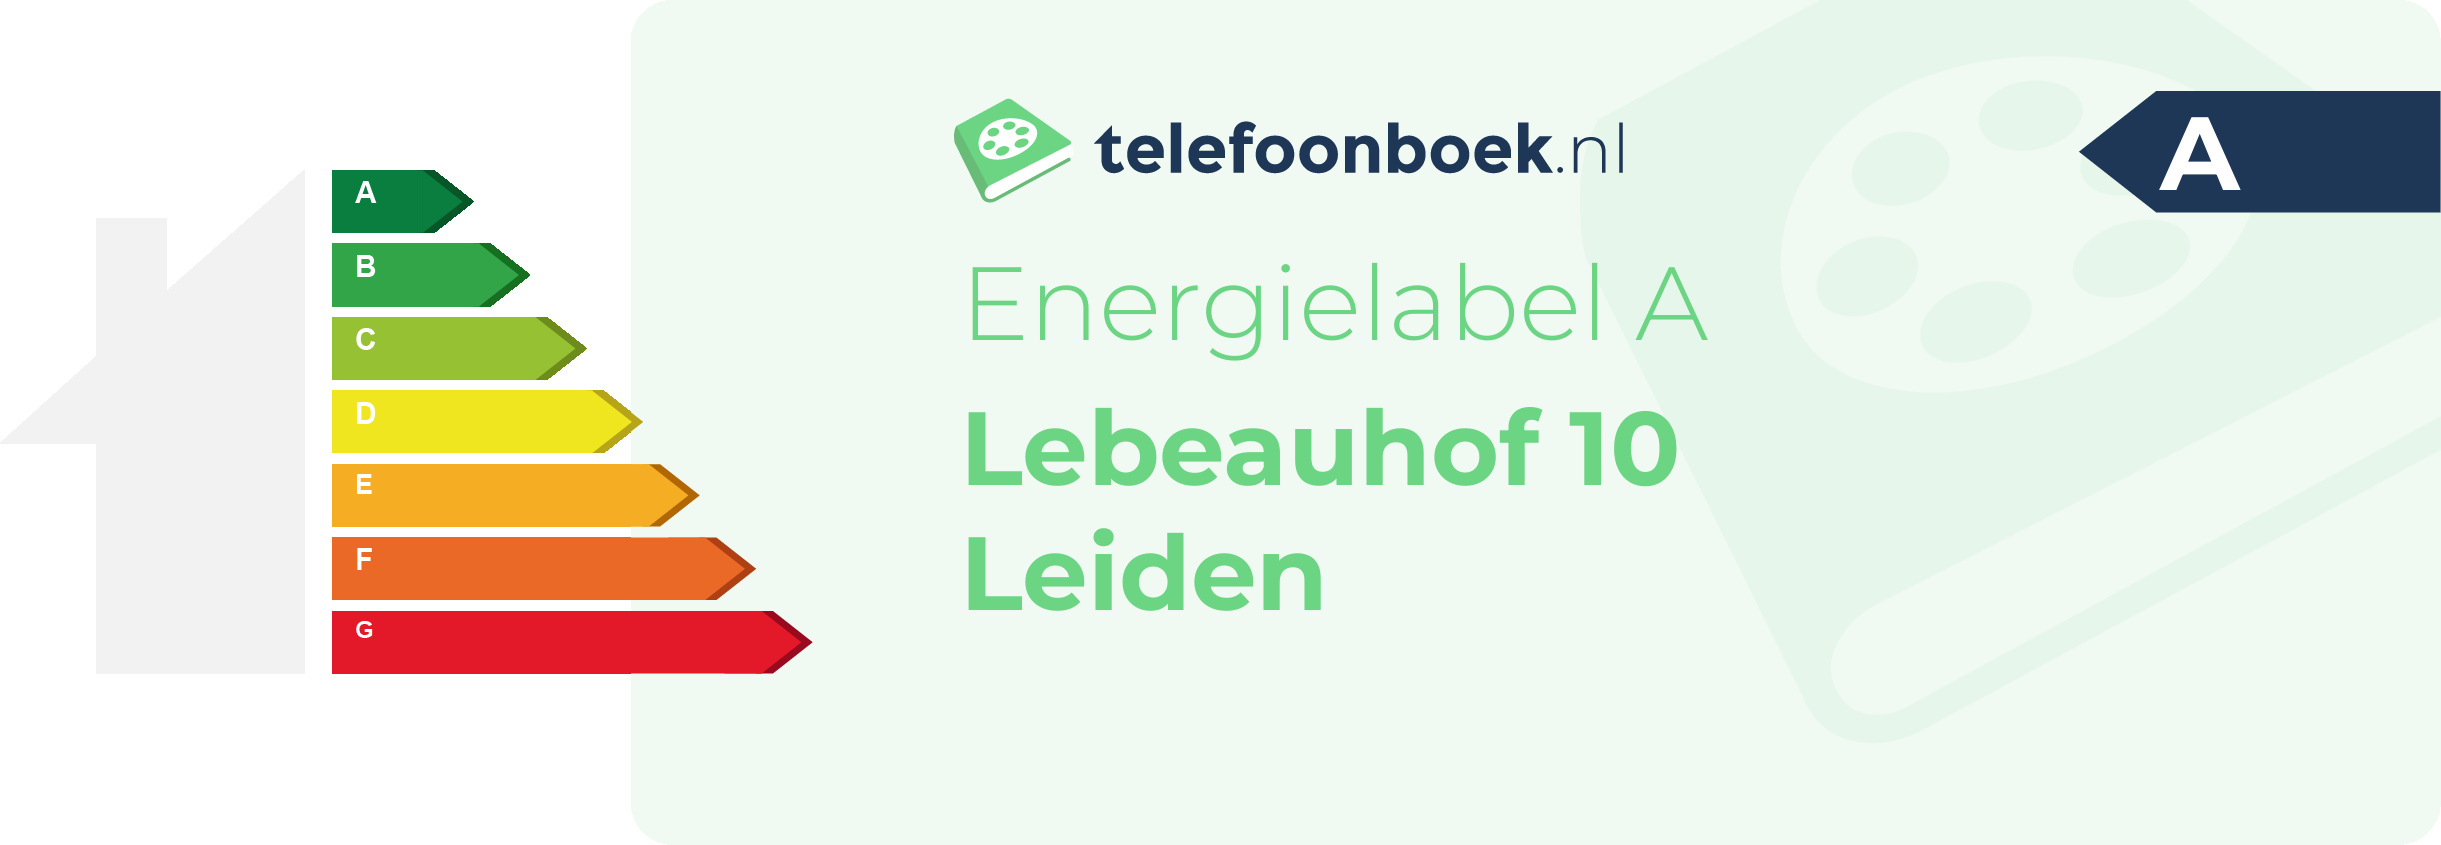 Energielabel Lebeauhof 10 Leiden